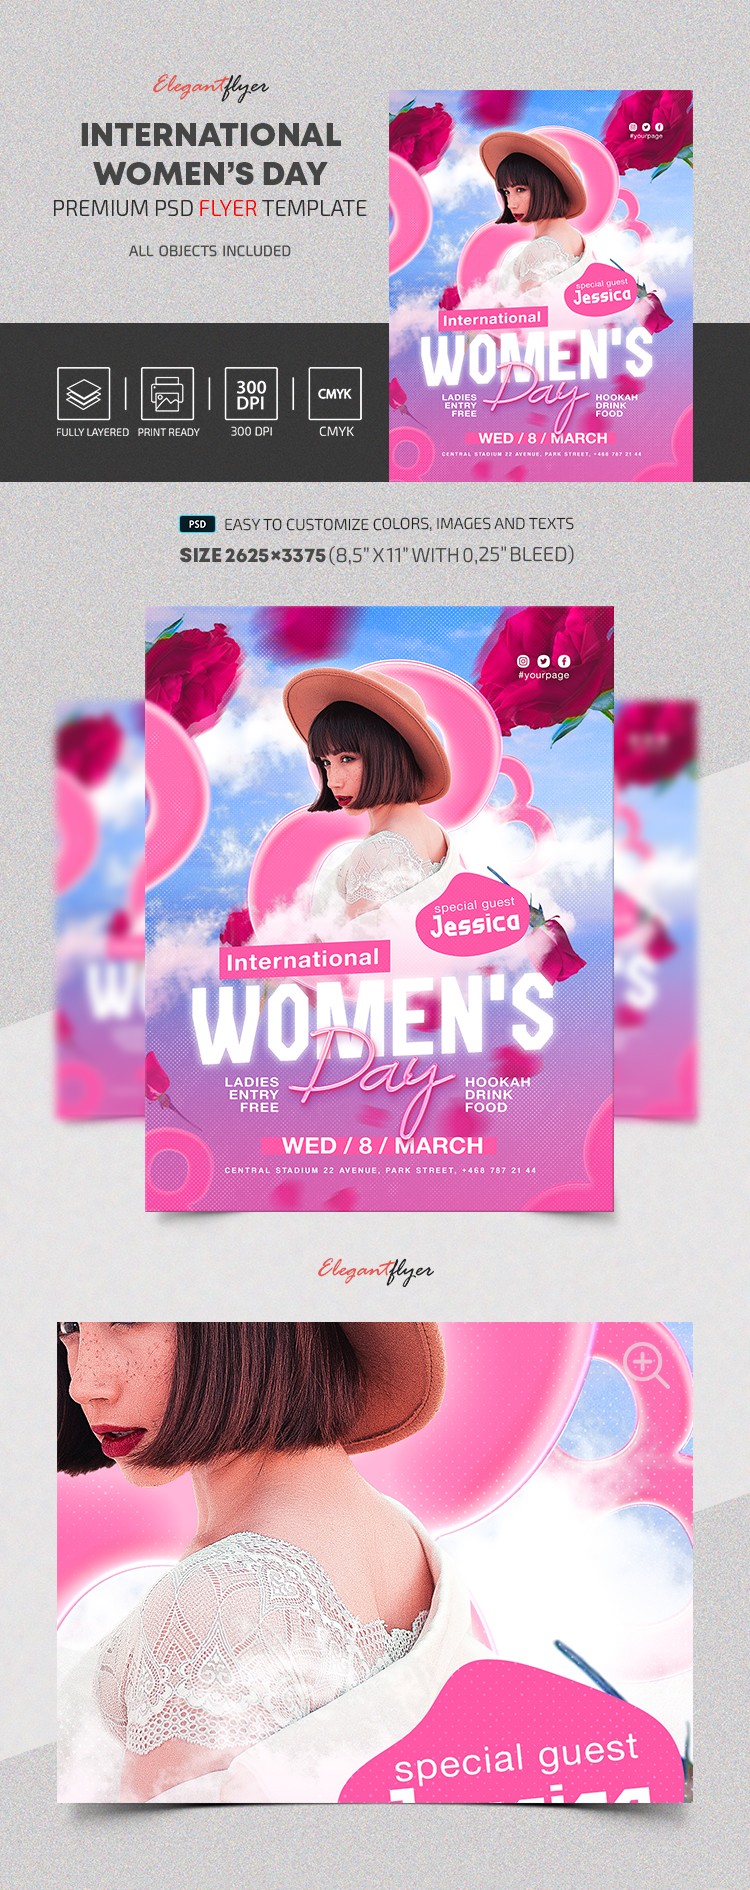 International Women's Day Flyer by ElegantFlyer